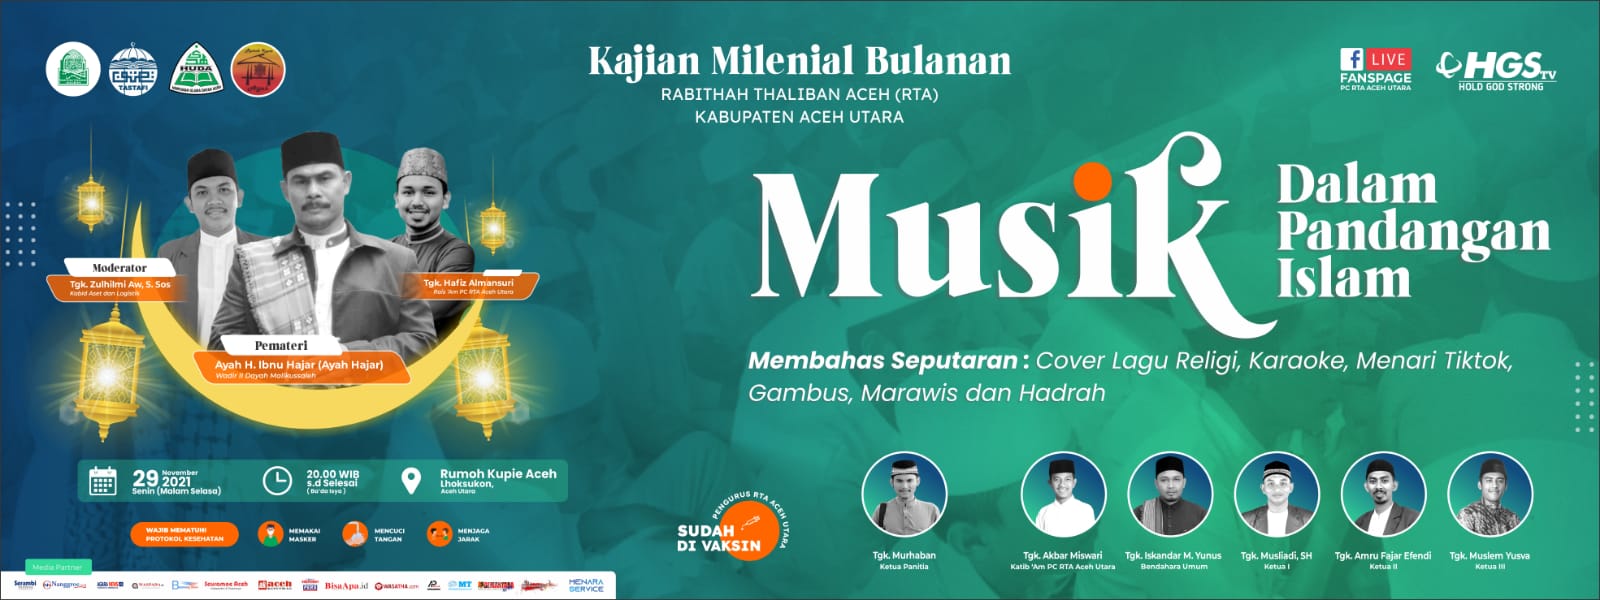 RTA Aceh Utara Kembali Gelar Kajian Milenial Bertema Musik Dalam Pandangan Islam, Ini Jadwalnya!